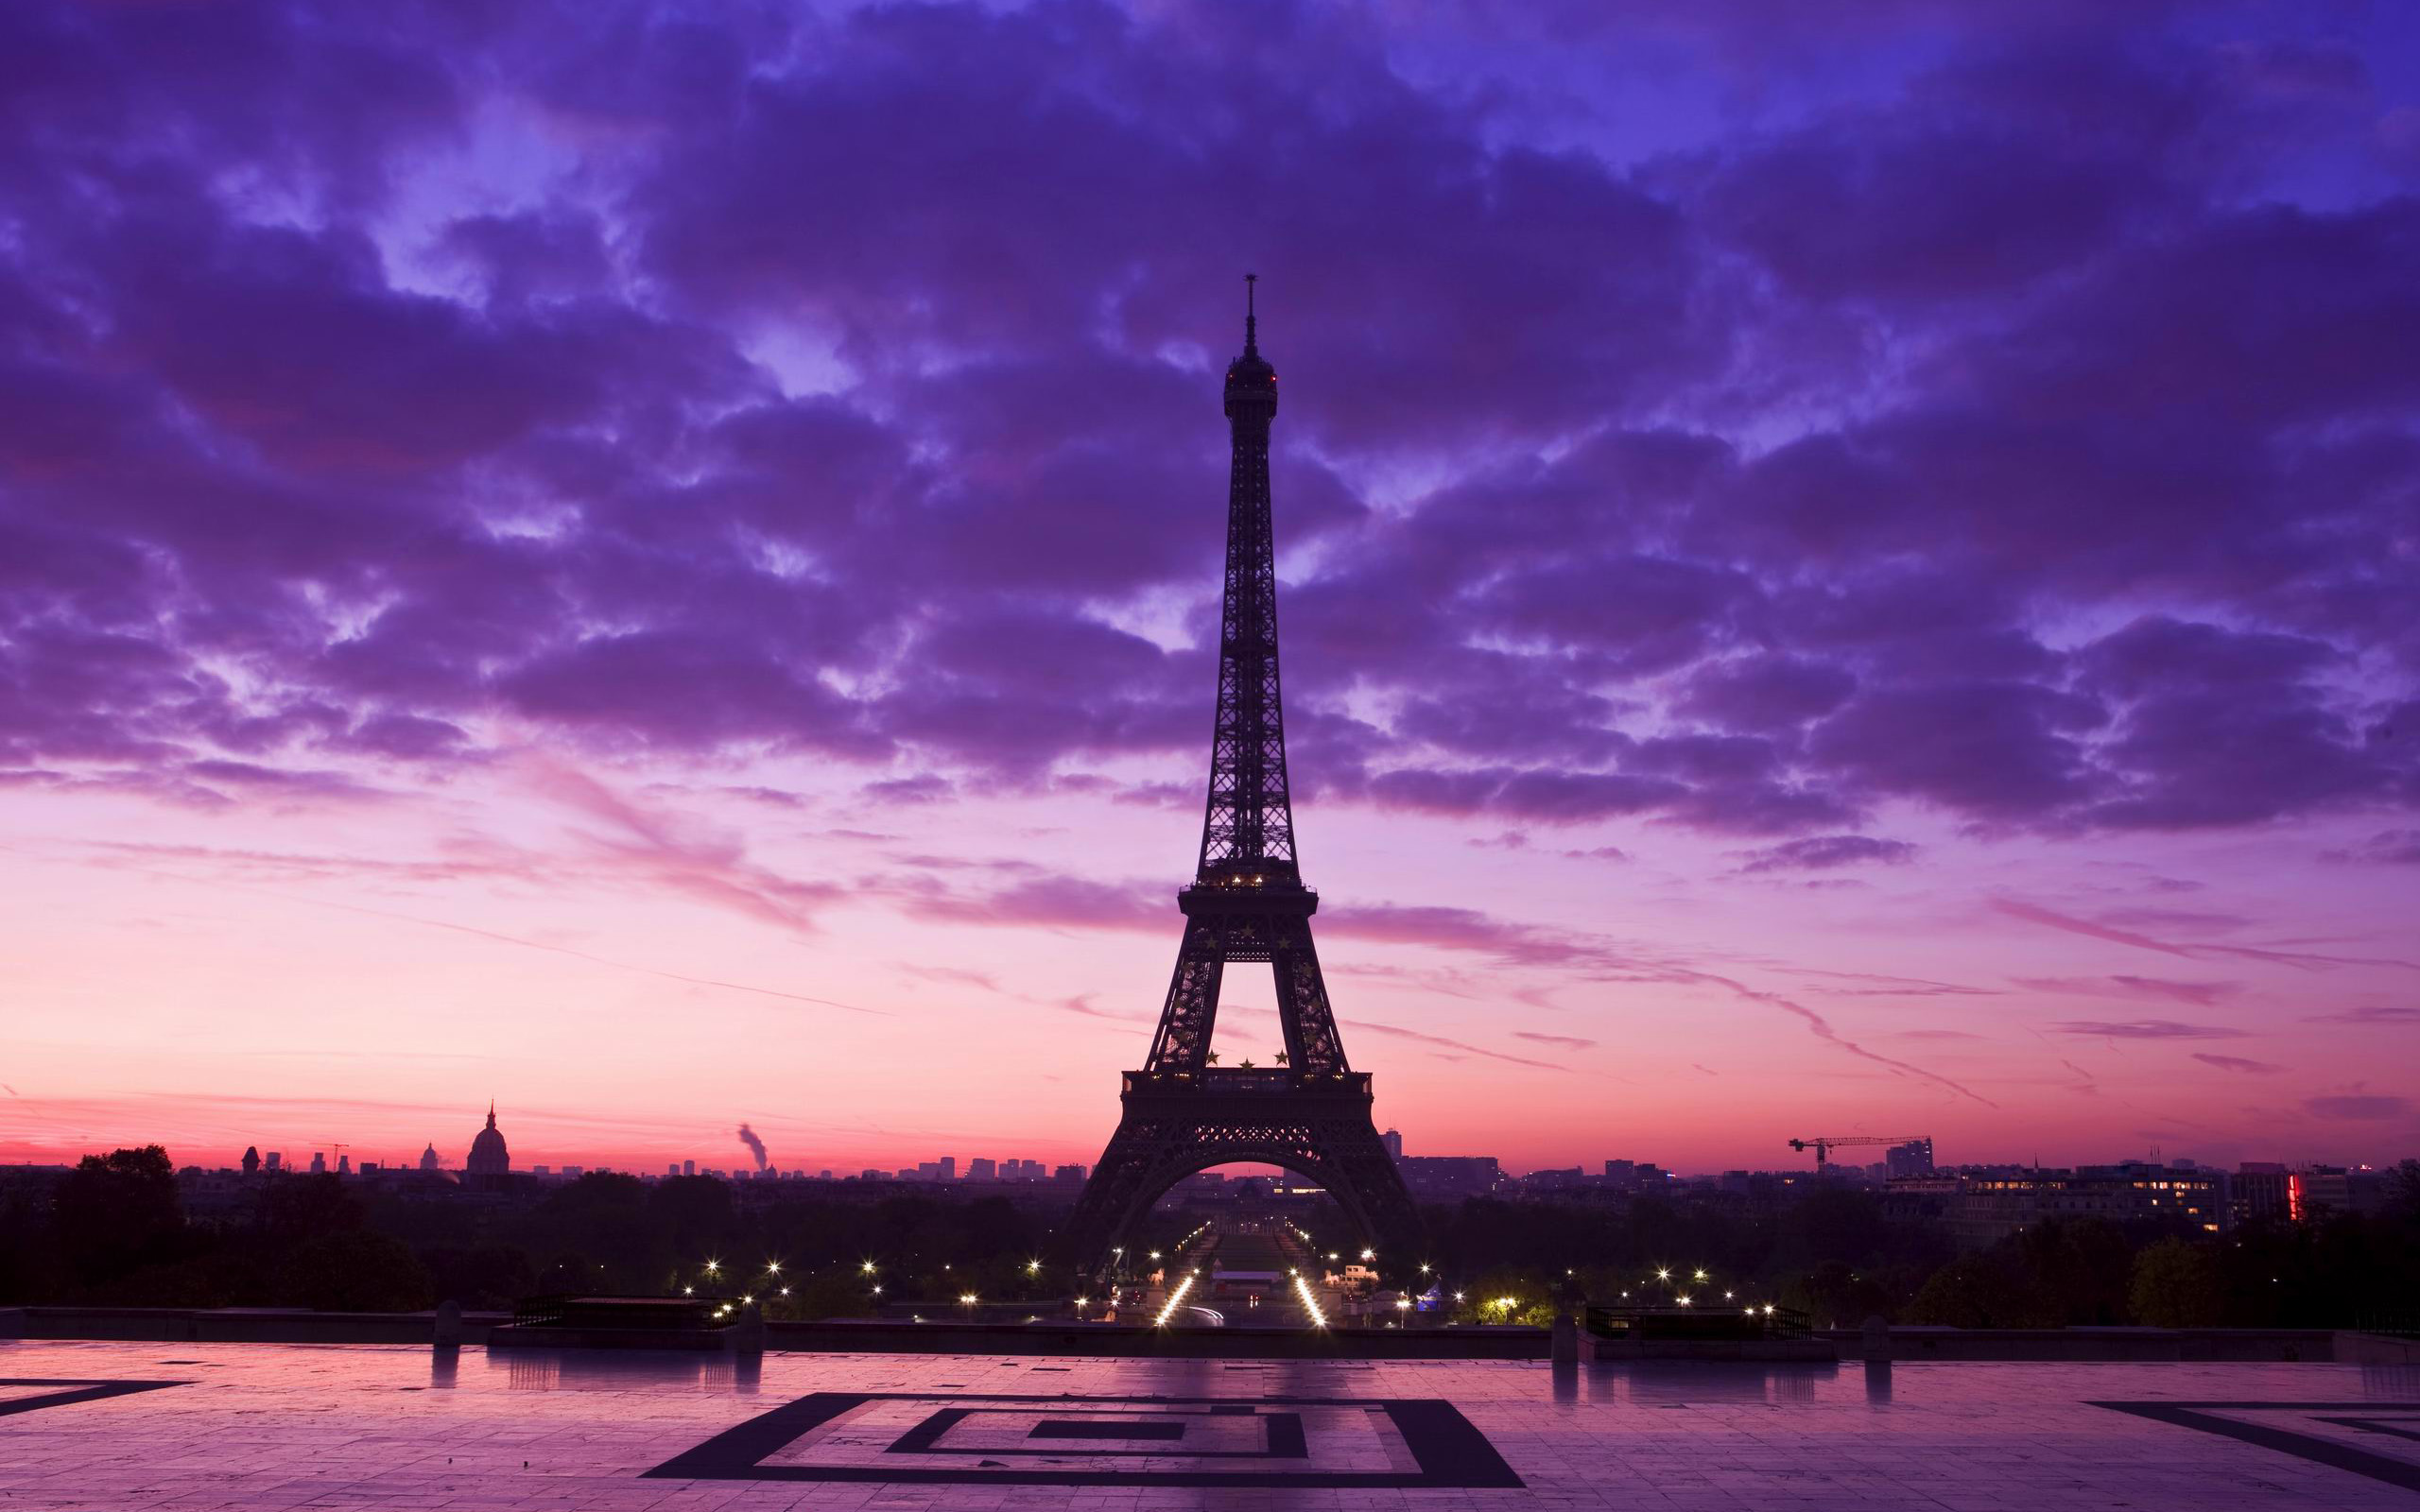 Эйфелева башня Париж закат бесплатно